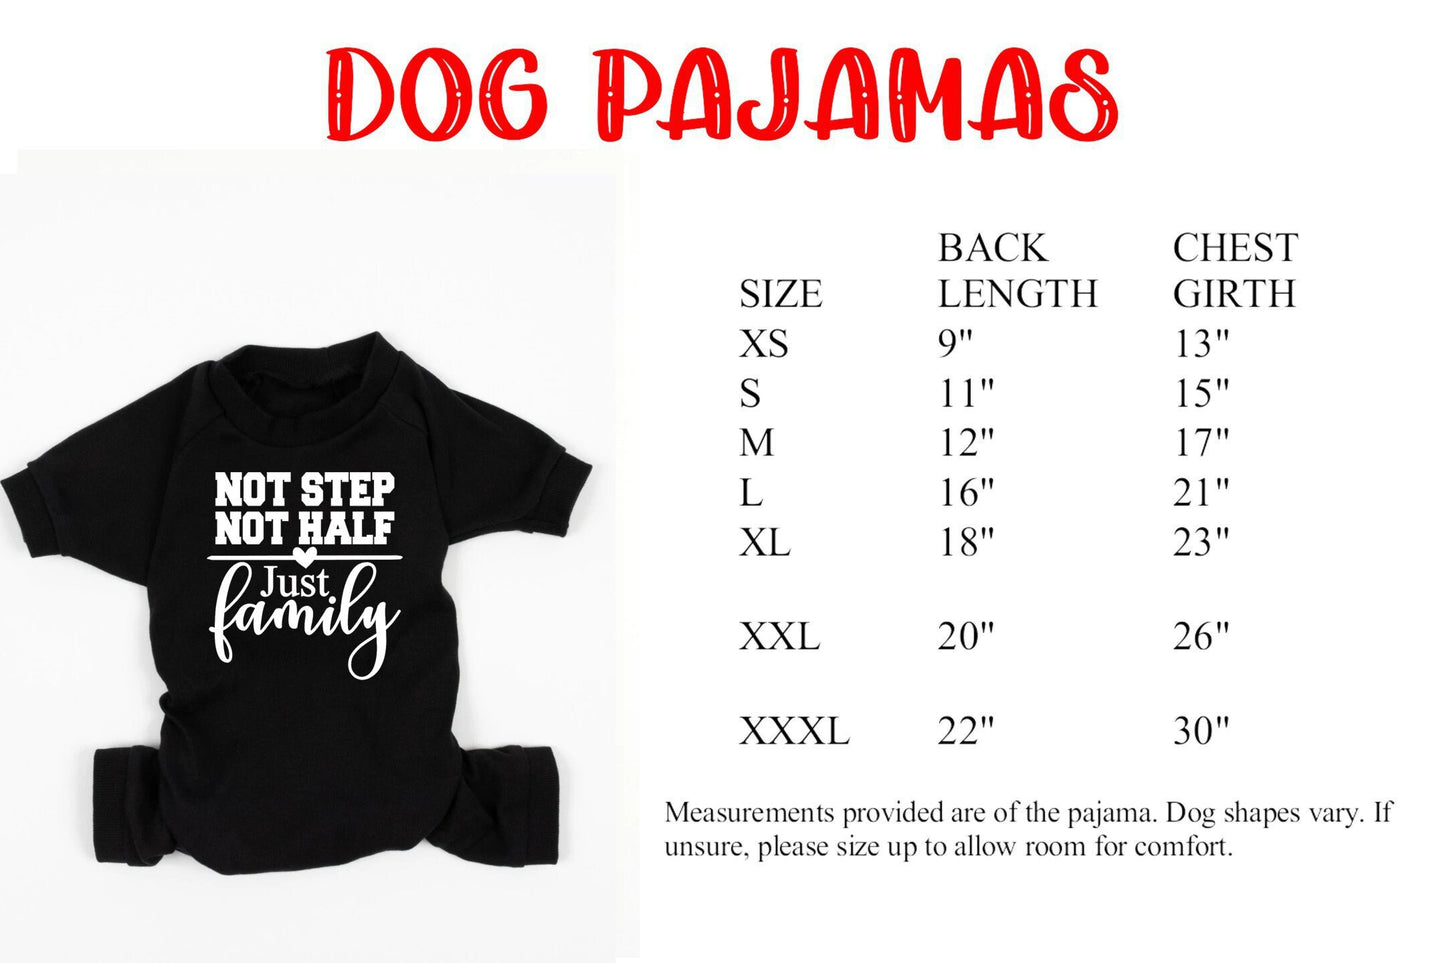 Matching Pajama Sets Not Step Not Half Just Family, blended family pajamas, dog pajamas, family pajamas, family photoshoot pajamas